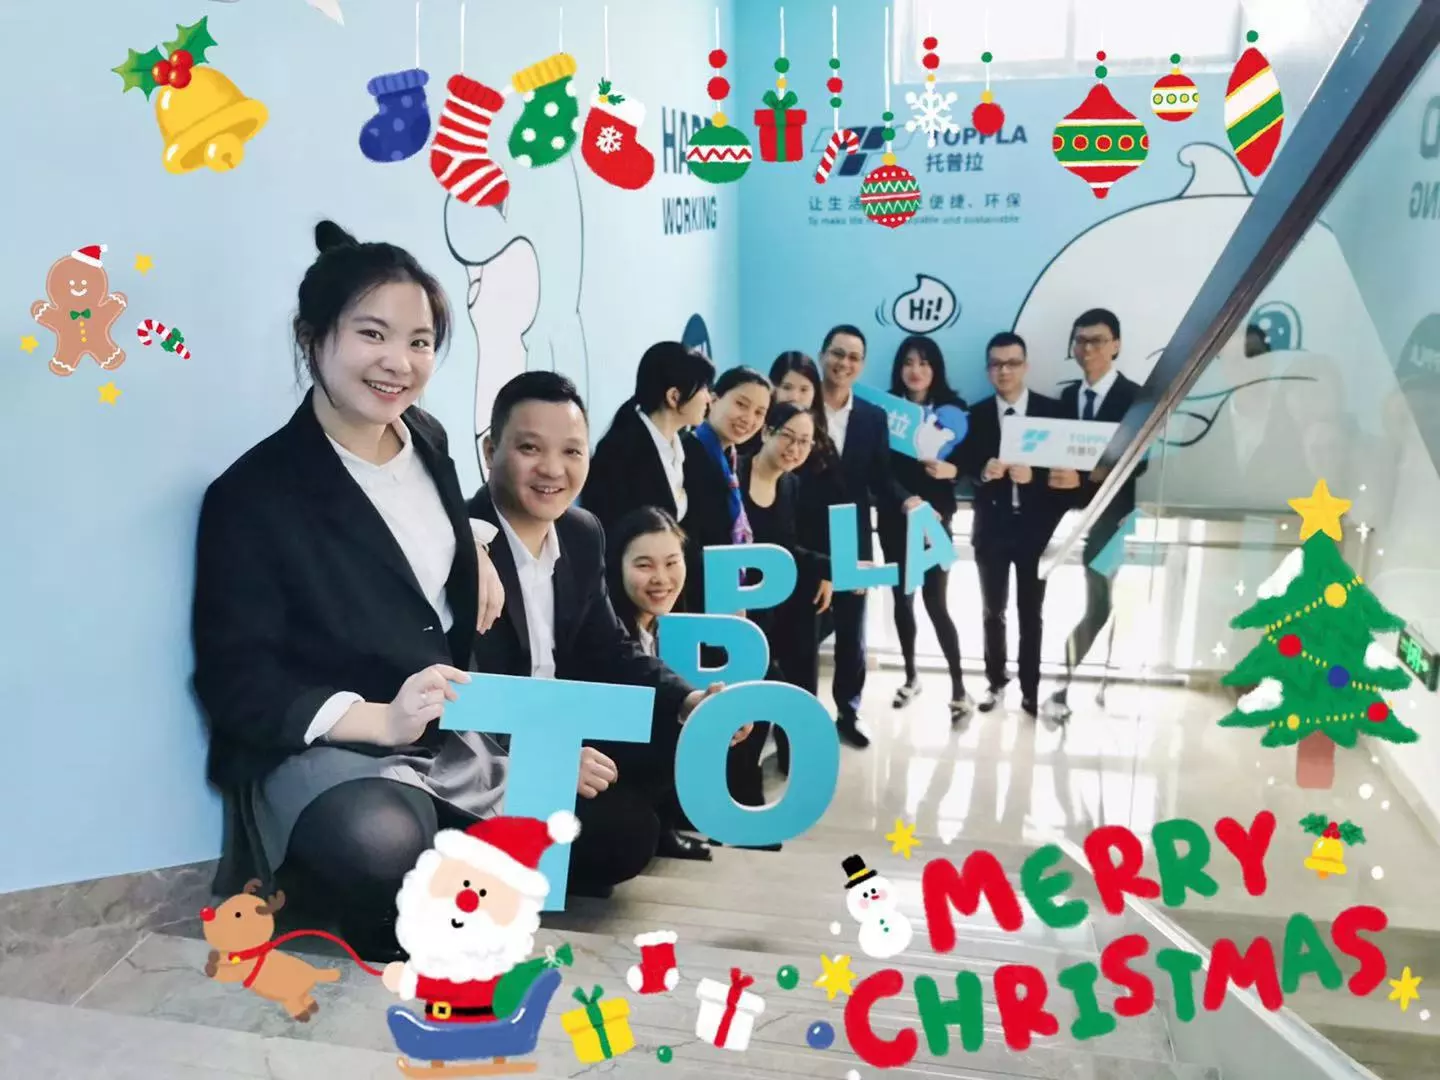 Merry Christmas from Toppla Family- plastic locker manufacturer